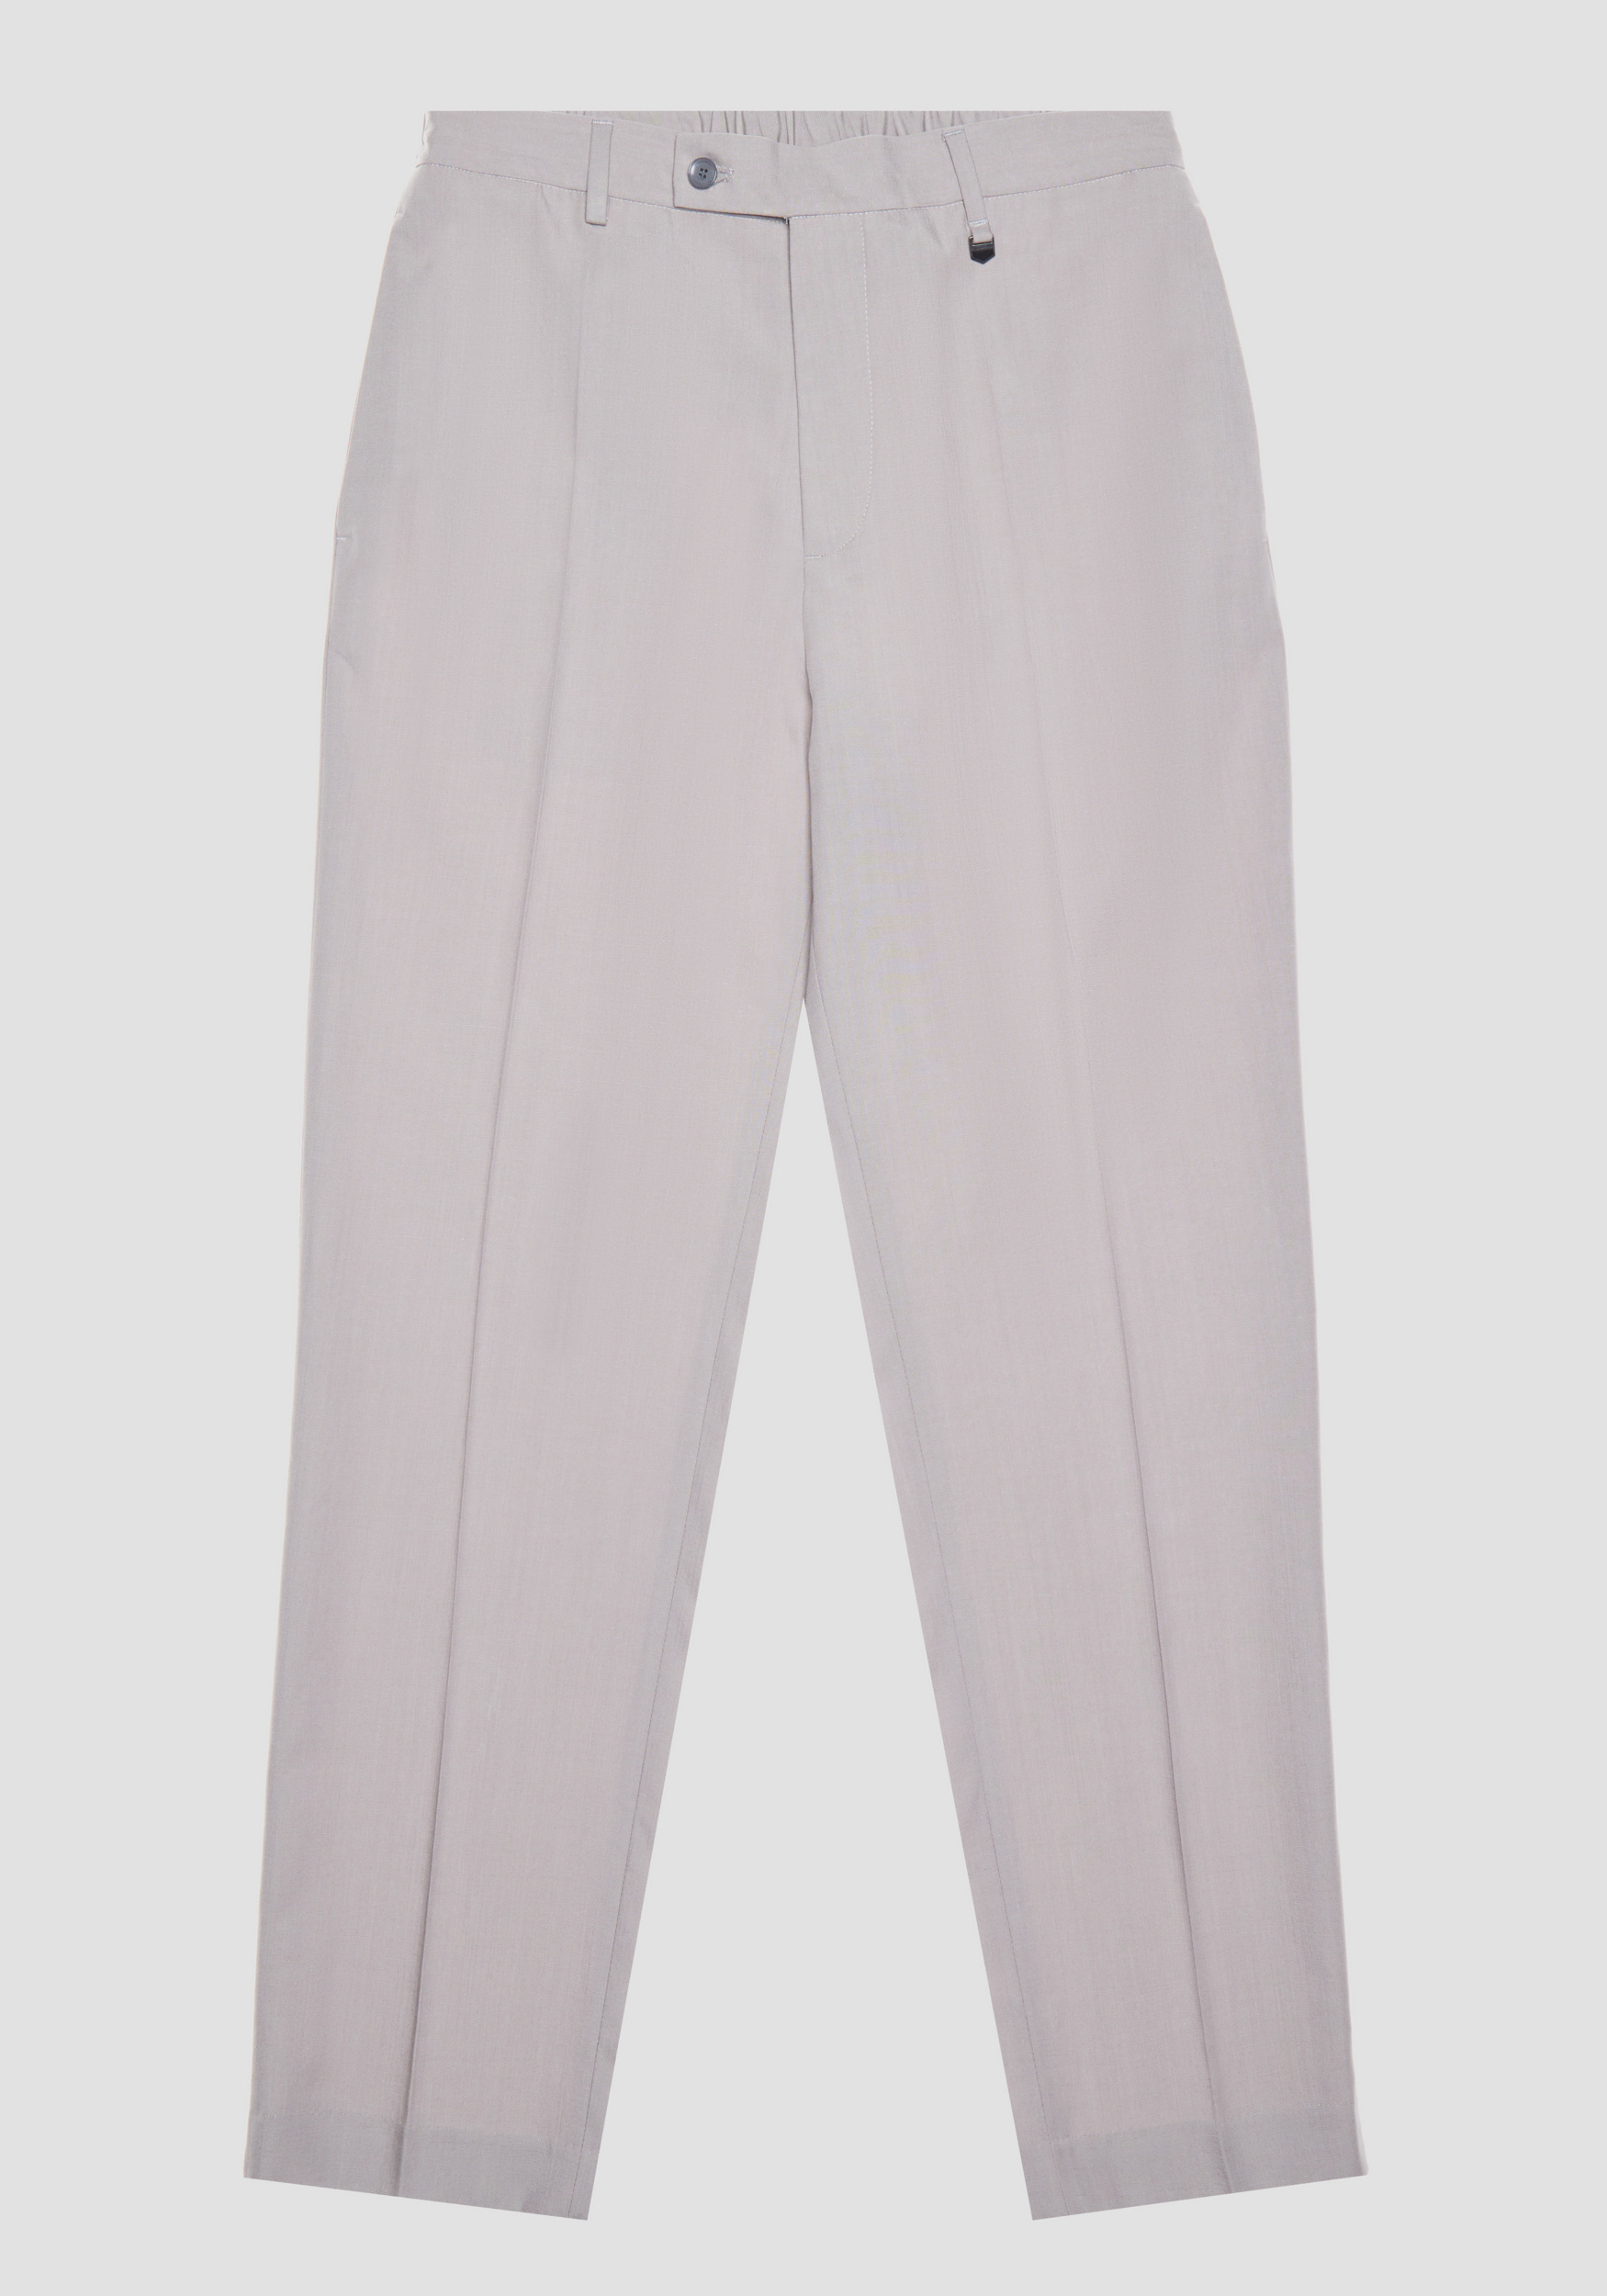 Buy Boys Navy Slim Fit Solid Trousers Online  779811  Allen Solly